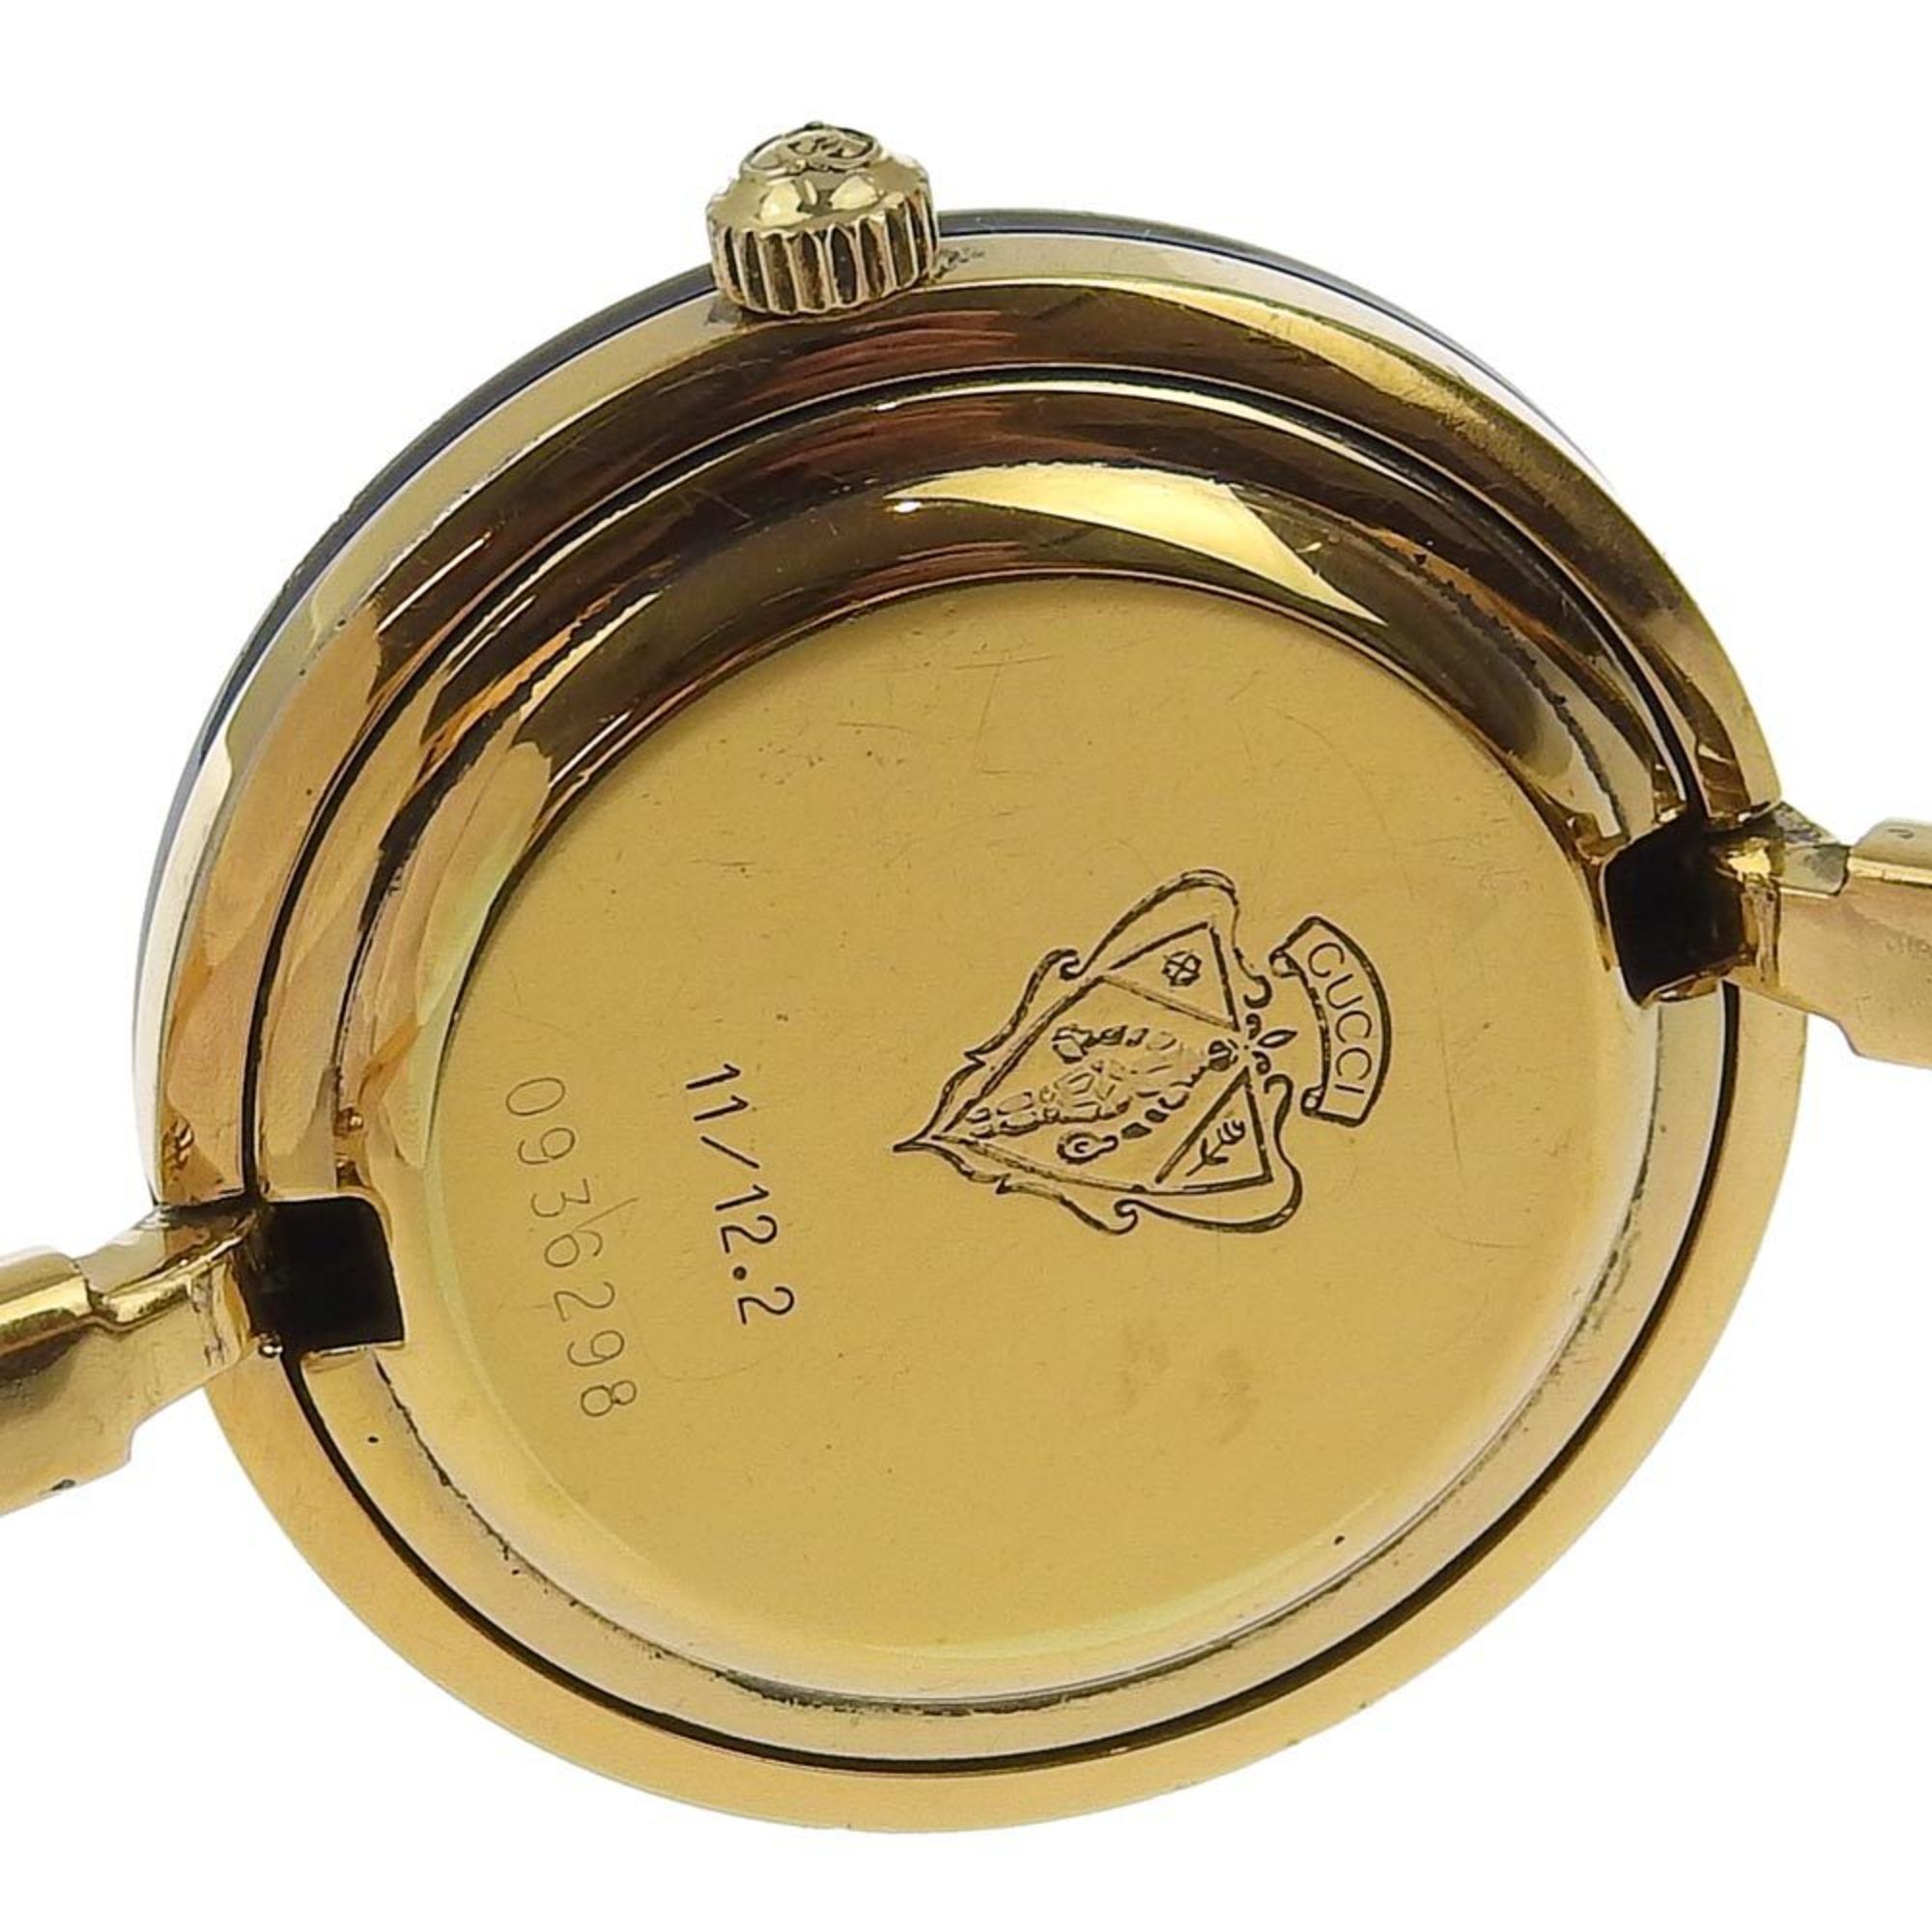 GUCCI Change Belt Watch 11/12.2 Gold Plated Swiss Made Quartz Analog Display White Dial Ladies